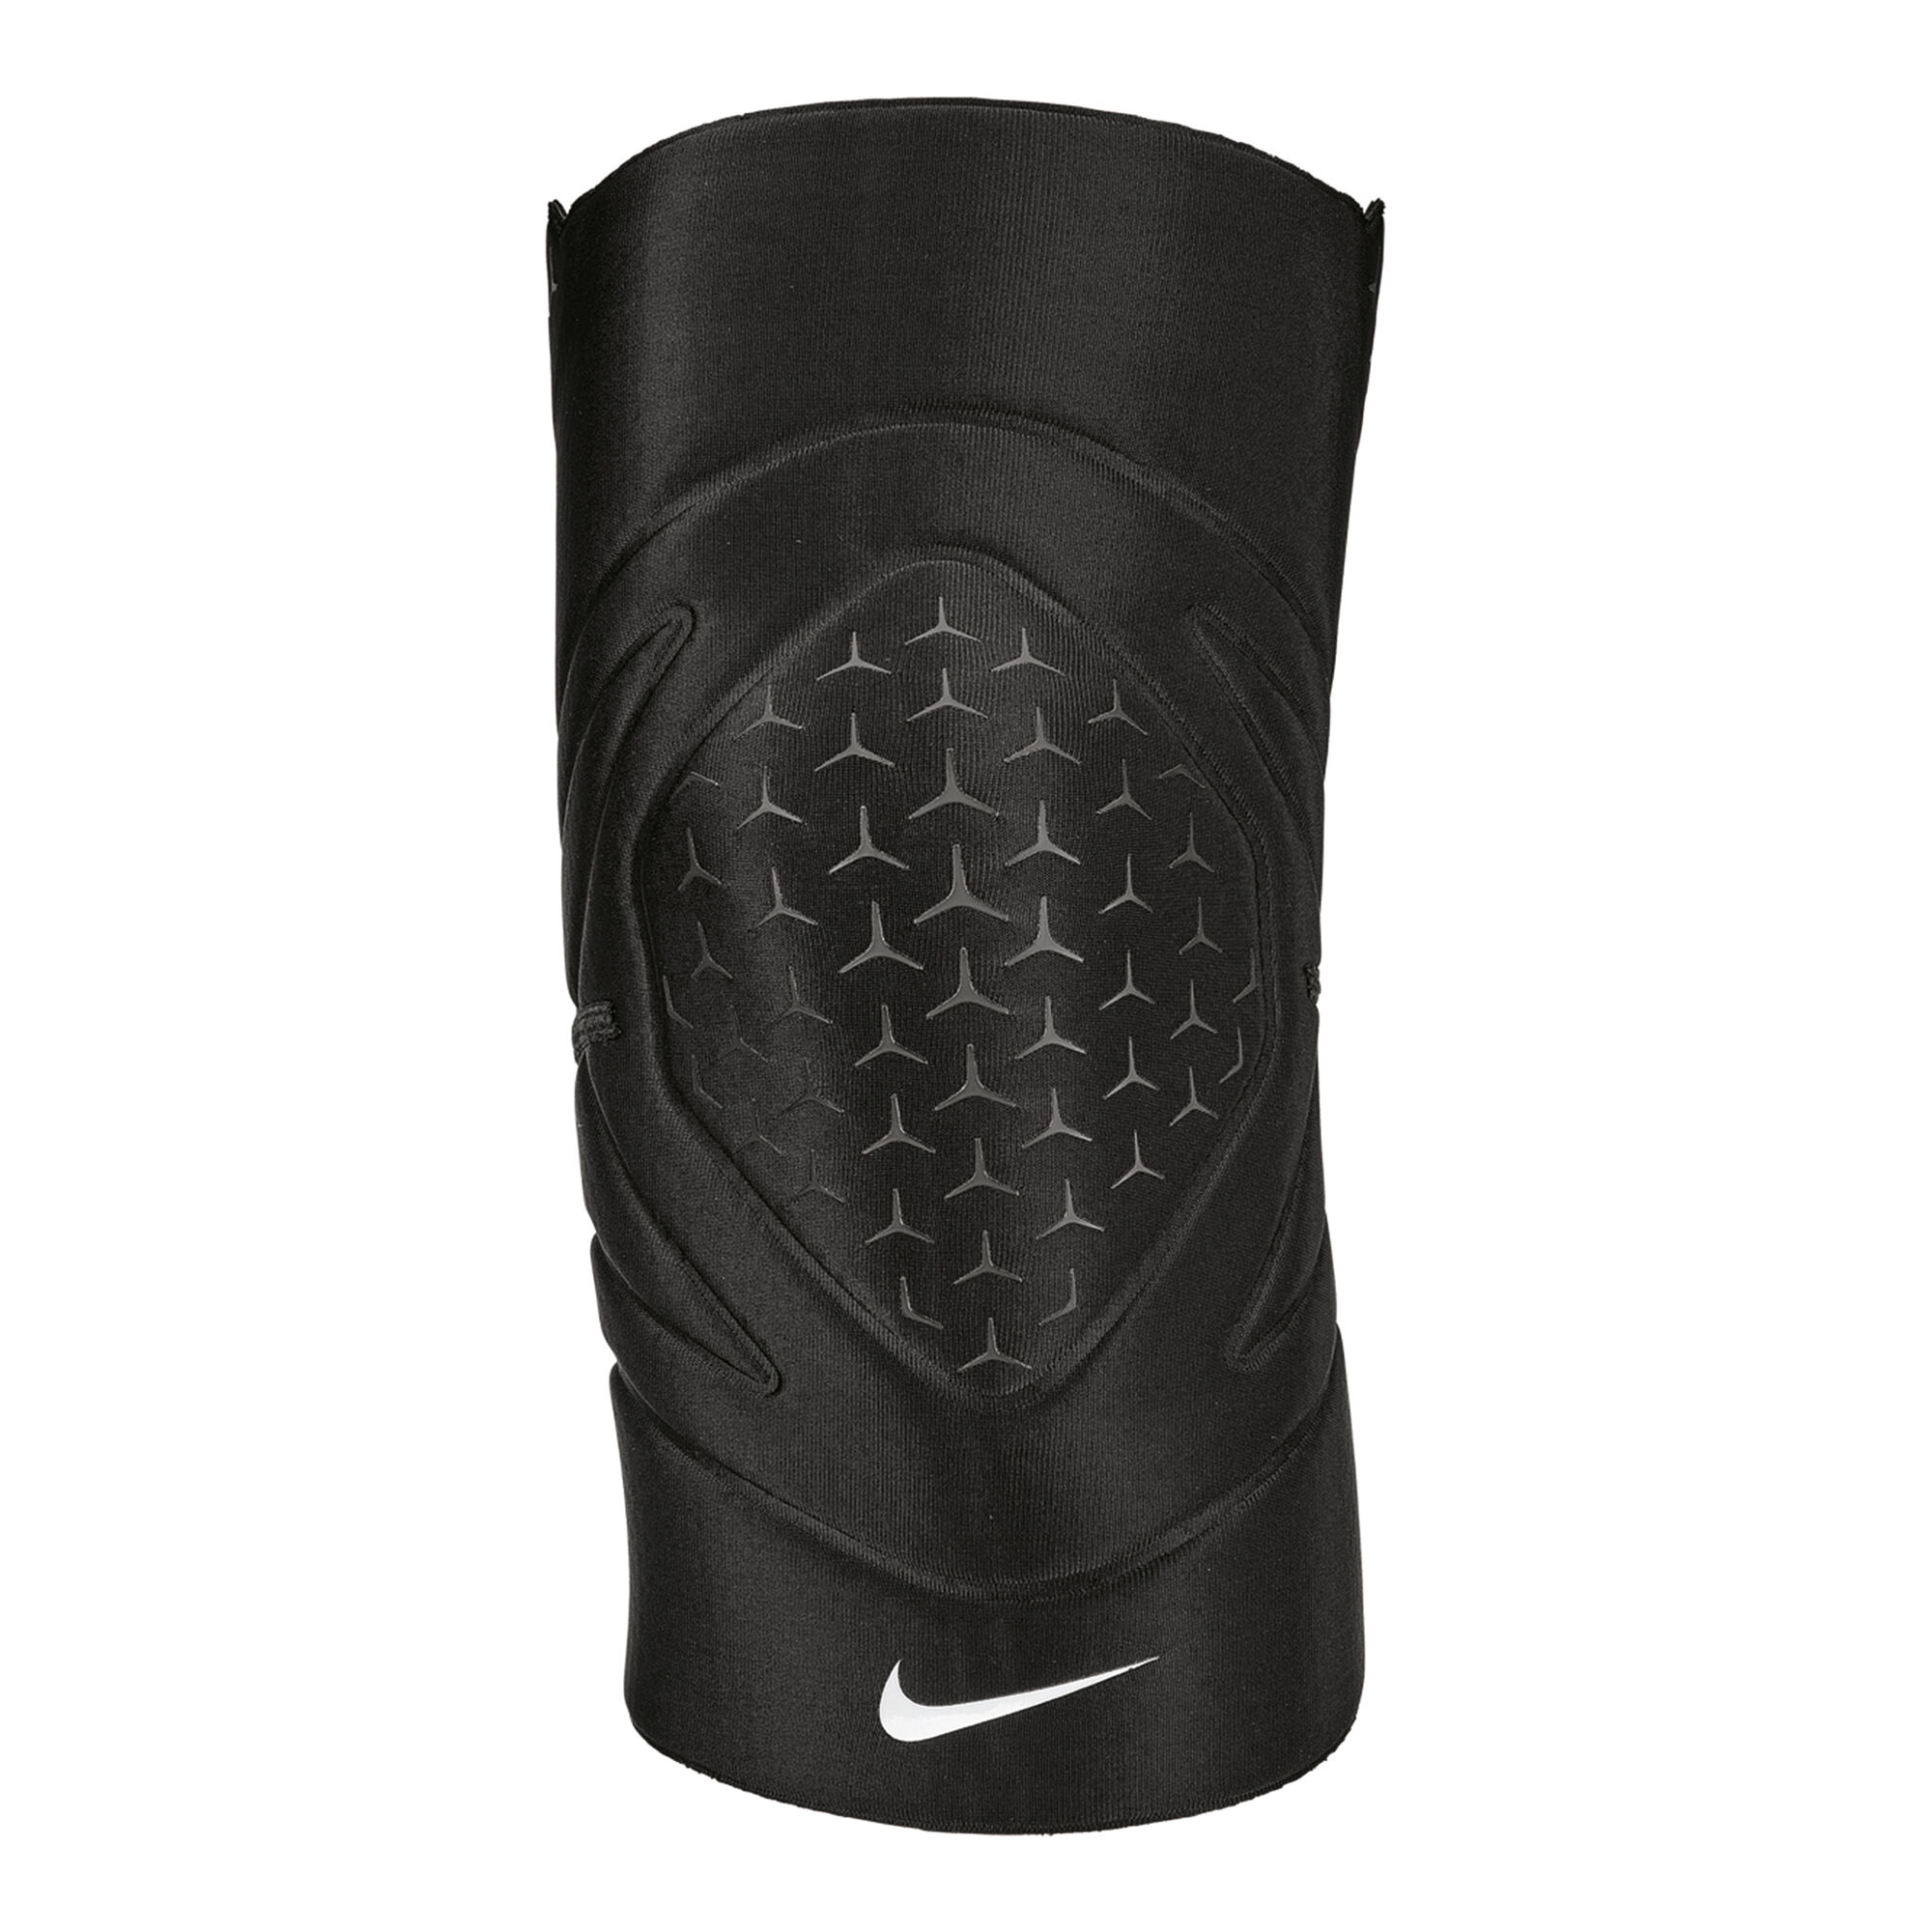 grind bijl Doorweekt Nike Pro Closed 3.0 Kniebandage - Zwart, Wit online kopen | Tennis-Point